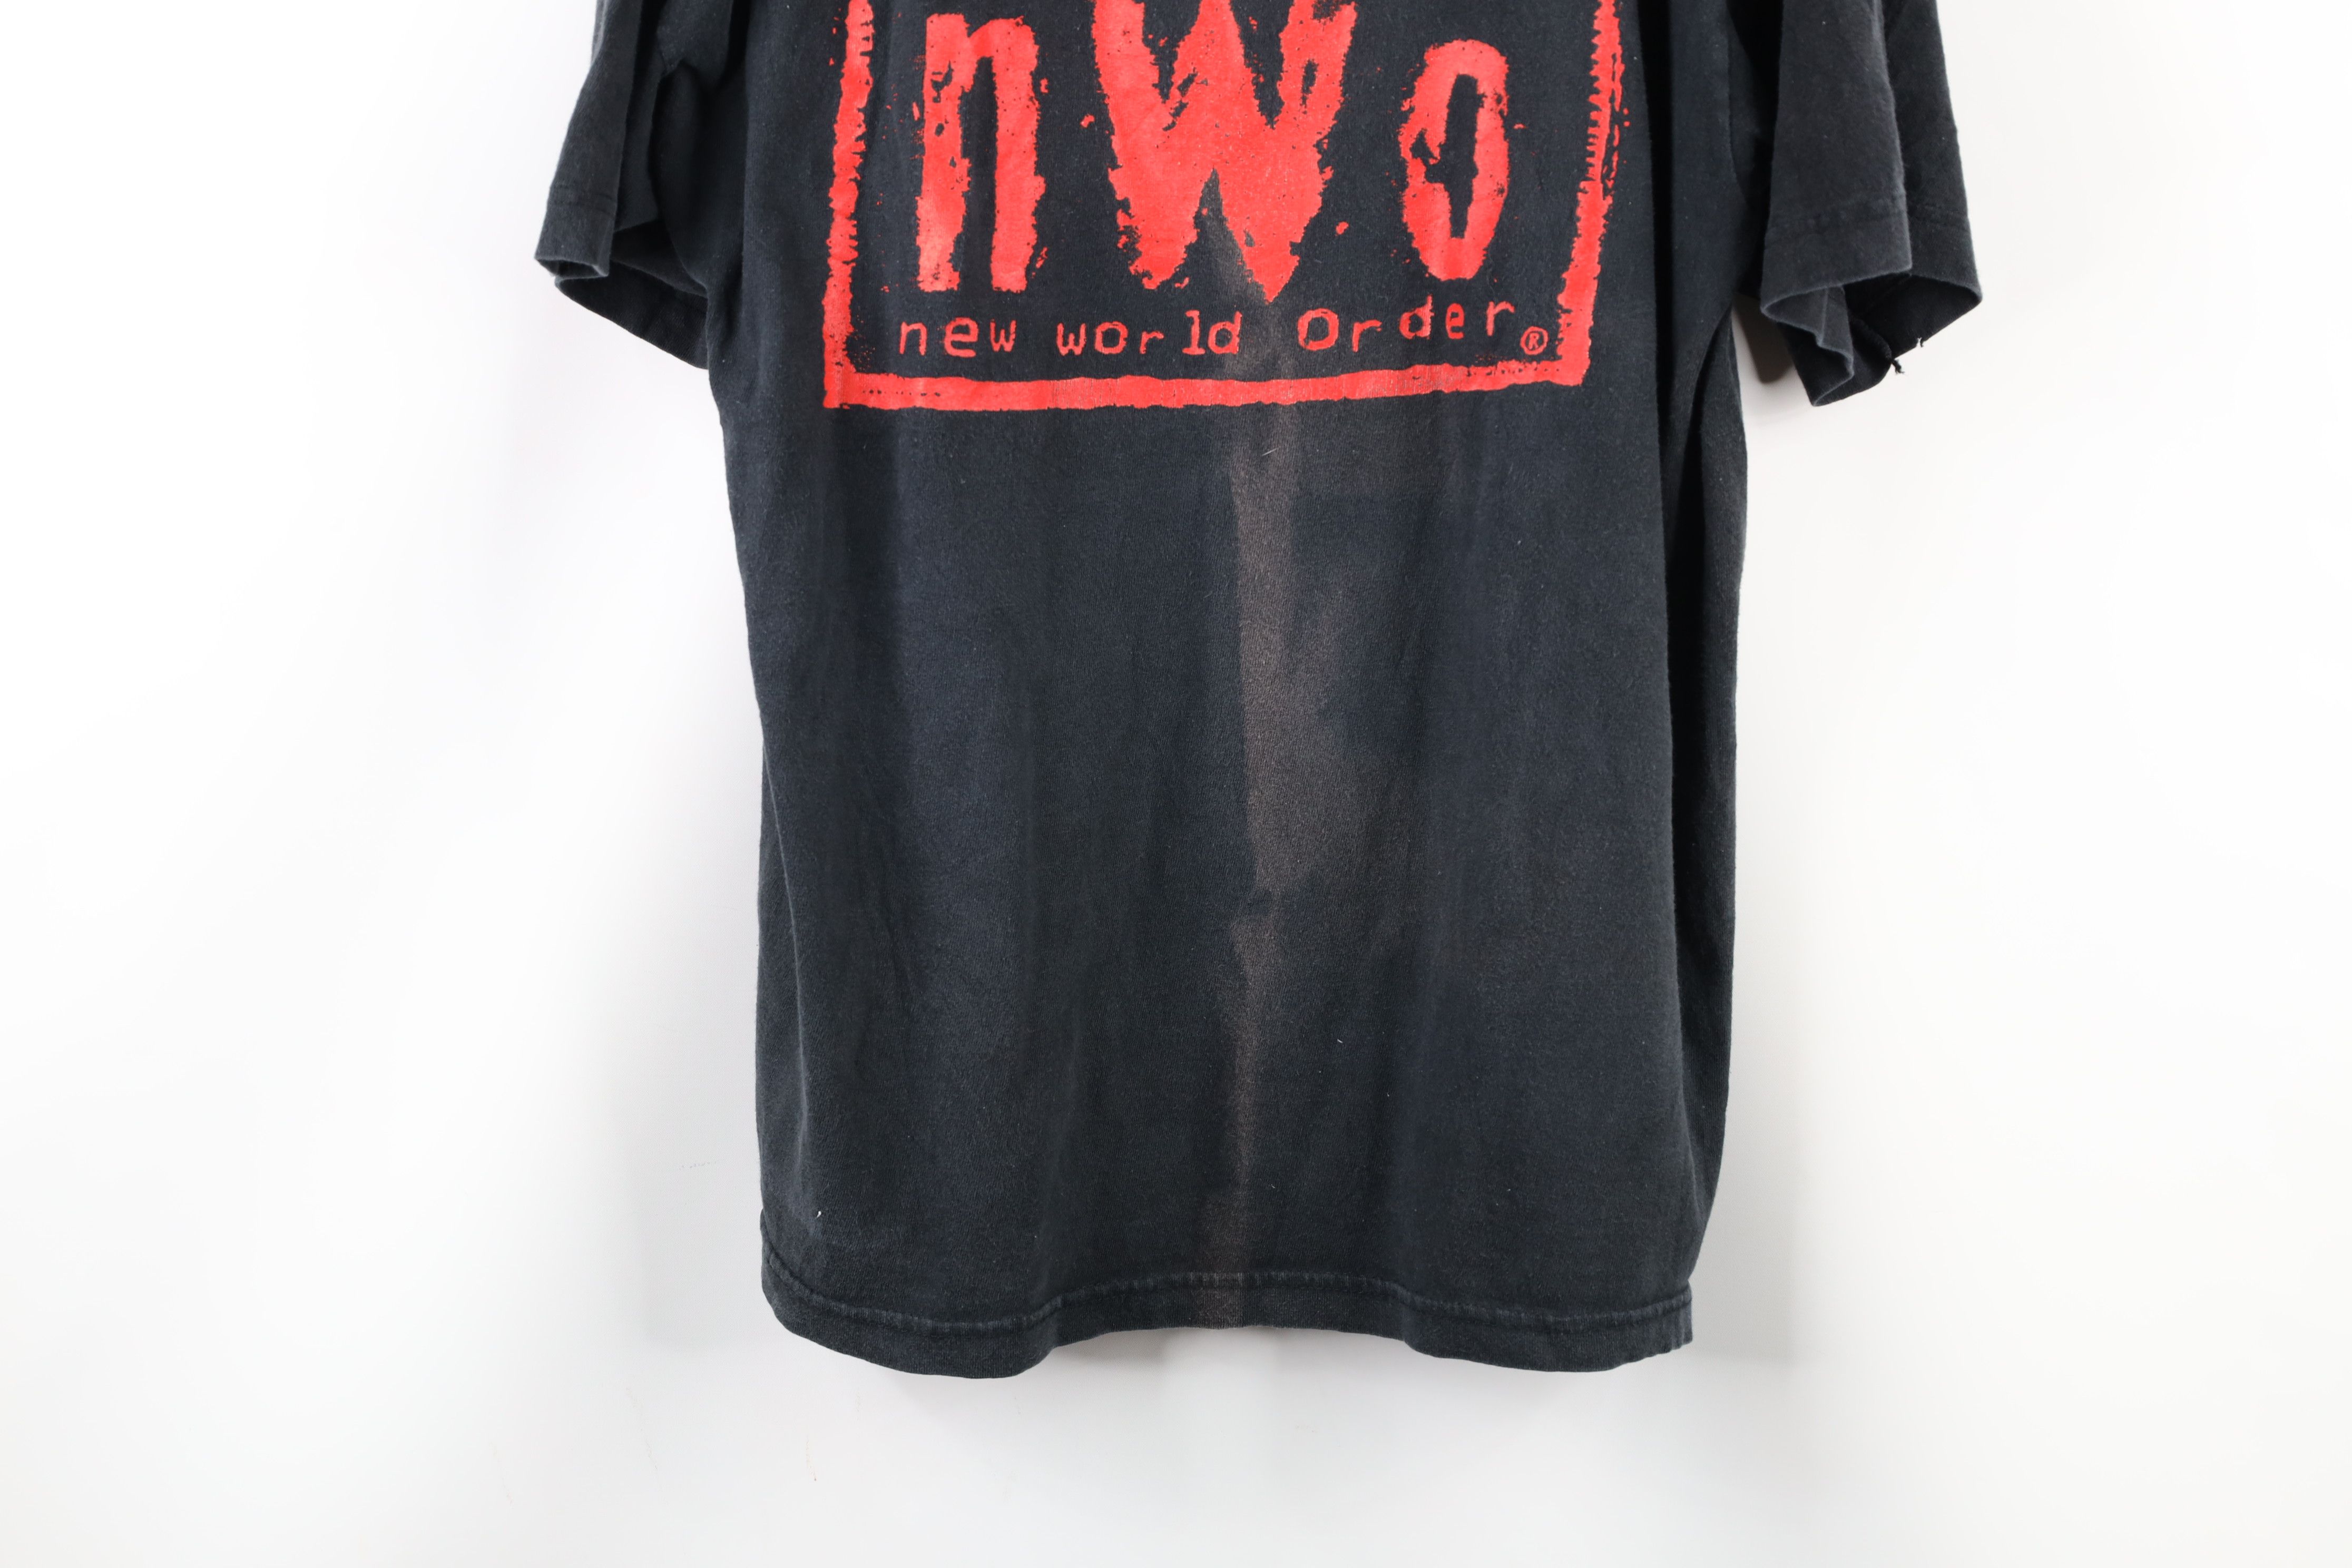 Vintage Vintage 90s WCW Out NWO New World Order Wrestling T-Shirt Size US XL / EU 56 / 4 - 3 Thumbnail